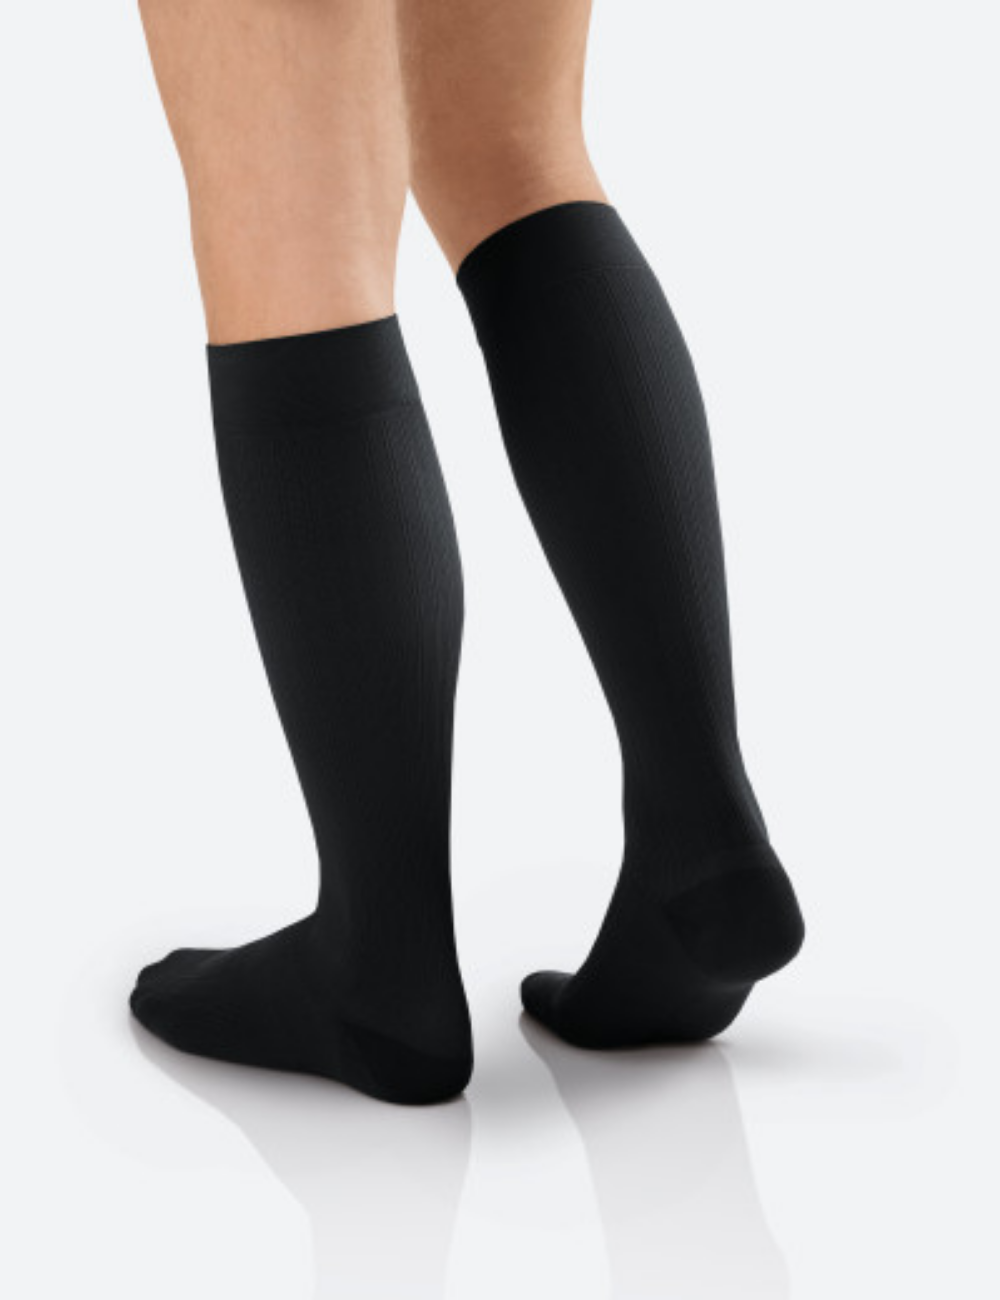 JOBST for Men Compression Socks Knee High Closed Toe 20-30mmHg, Ribbed